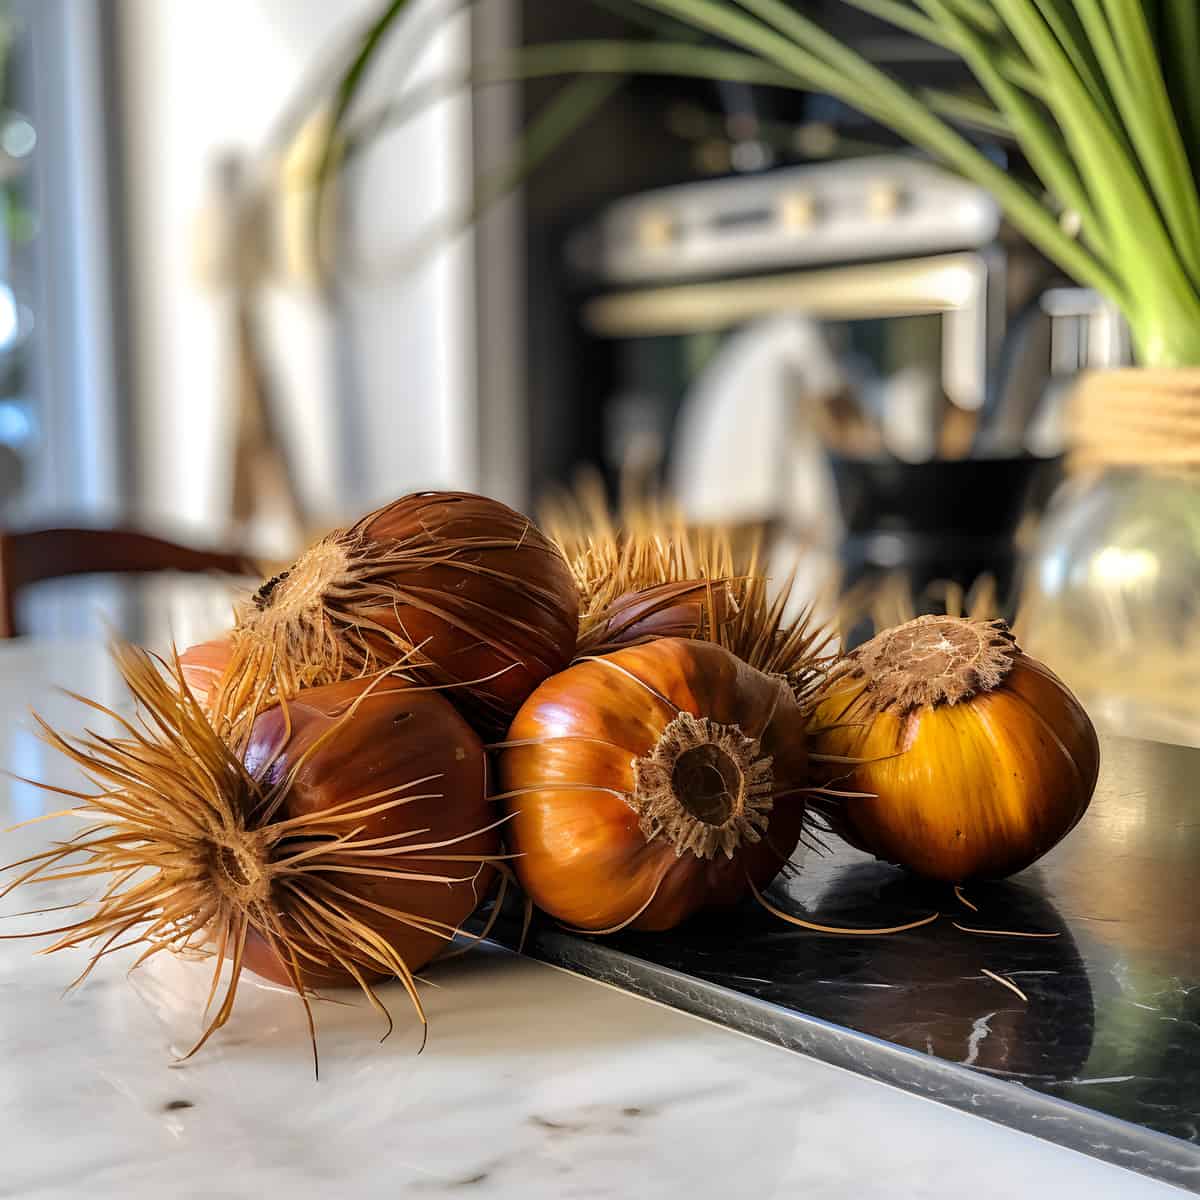 Butia Capitata Fruit on a kitchen counter